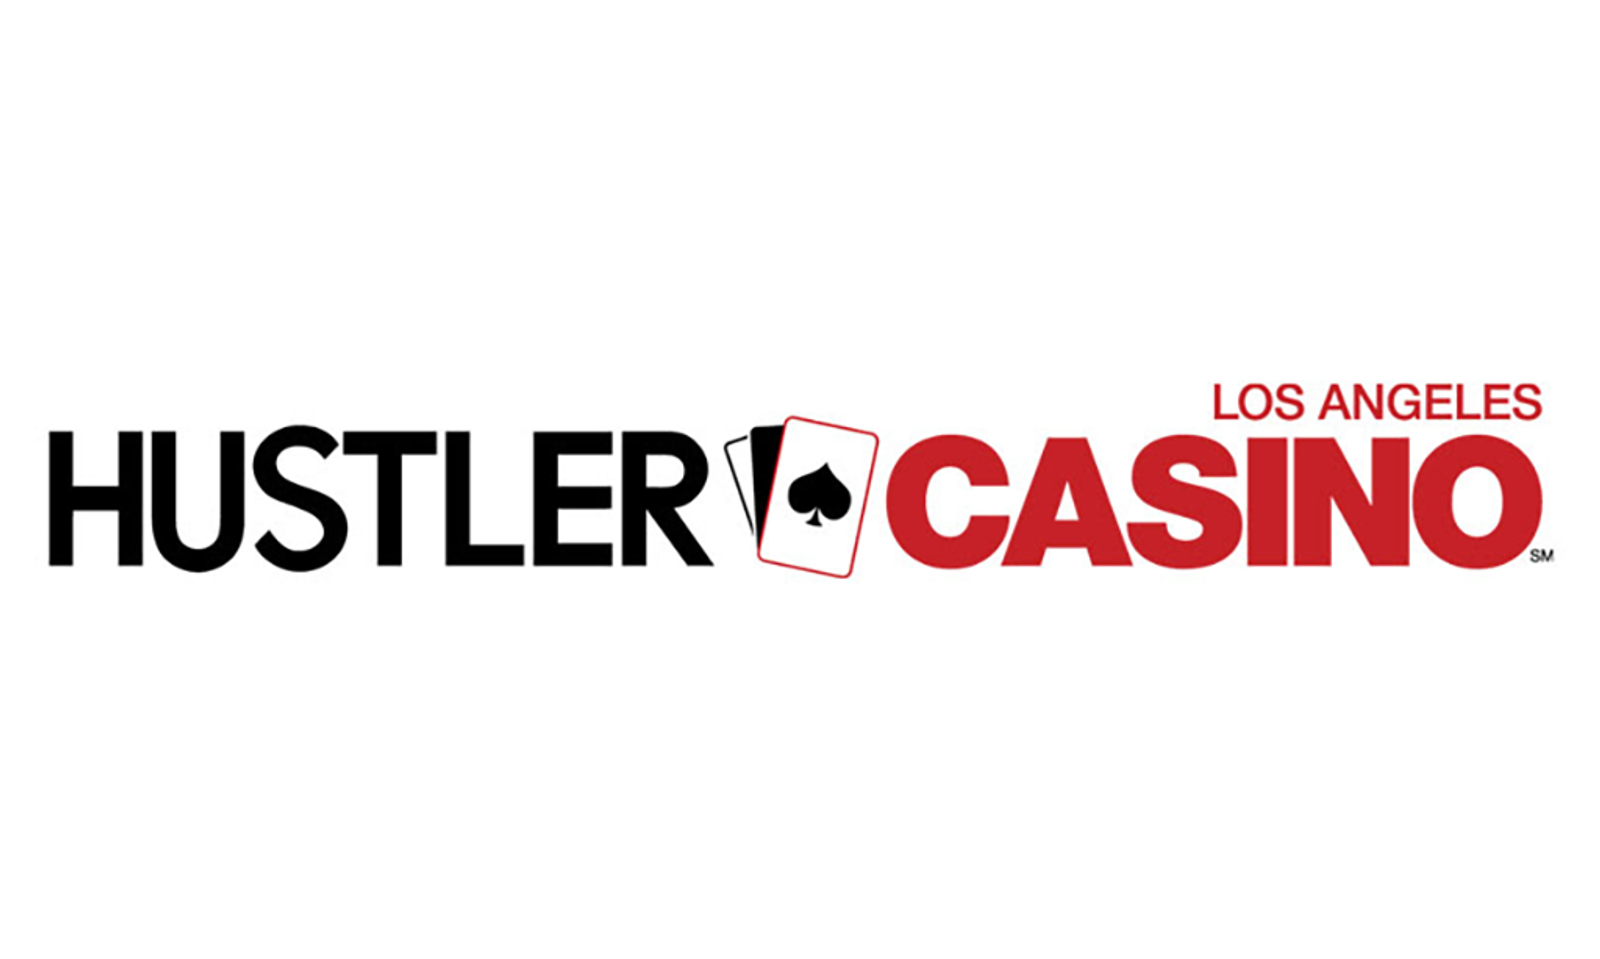 Hustler Casino Reopens Today